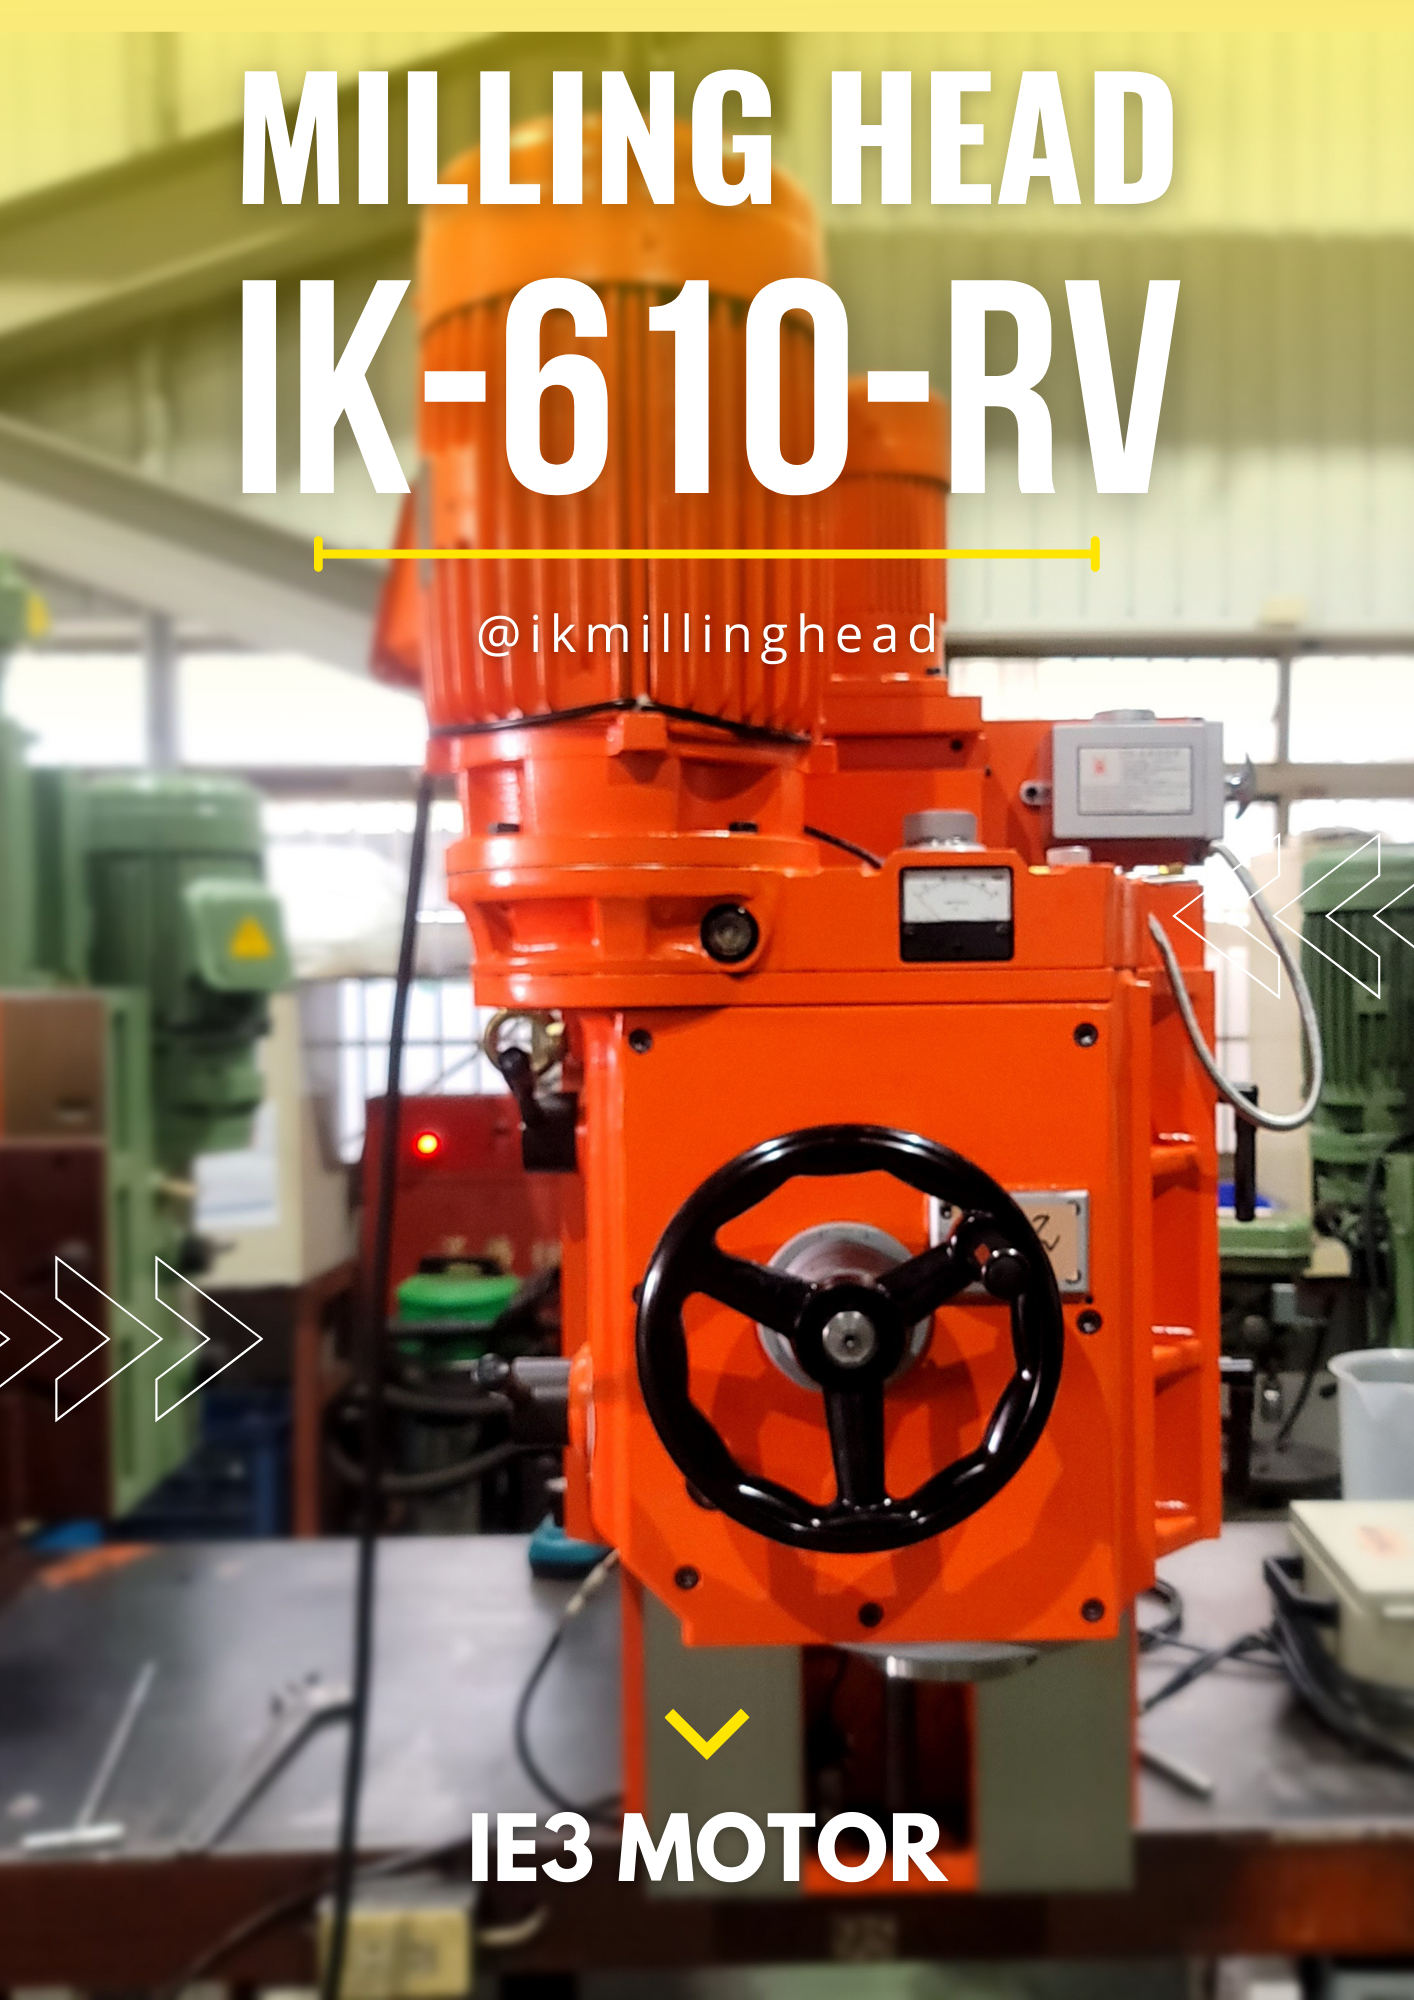 News|IK-610-RV gantry milling head with IE3 motor